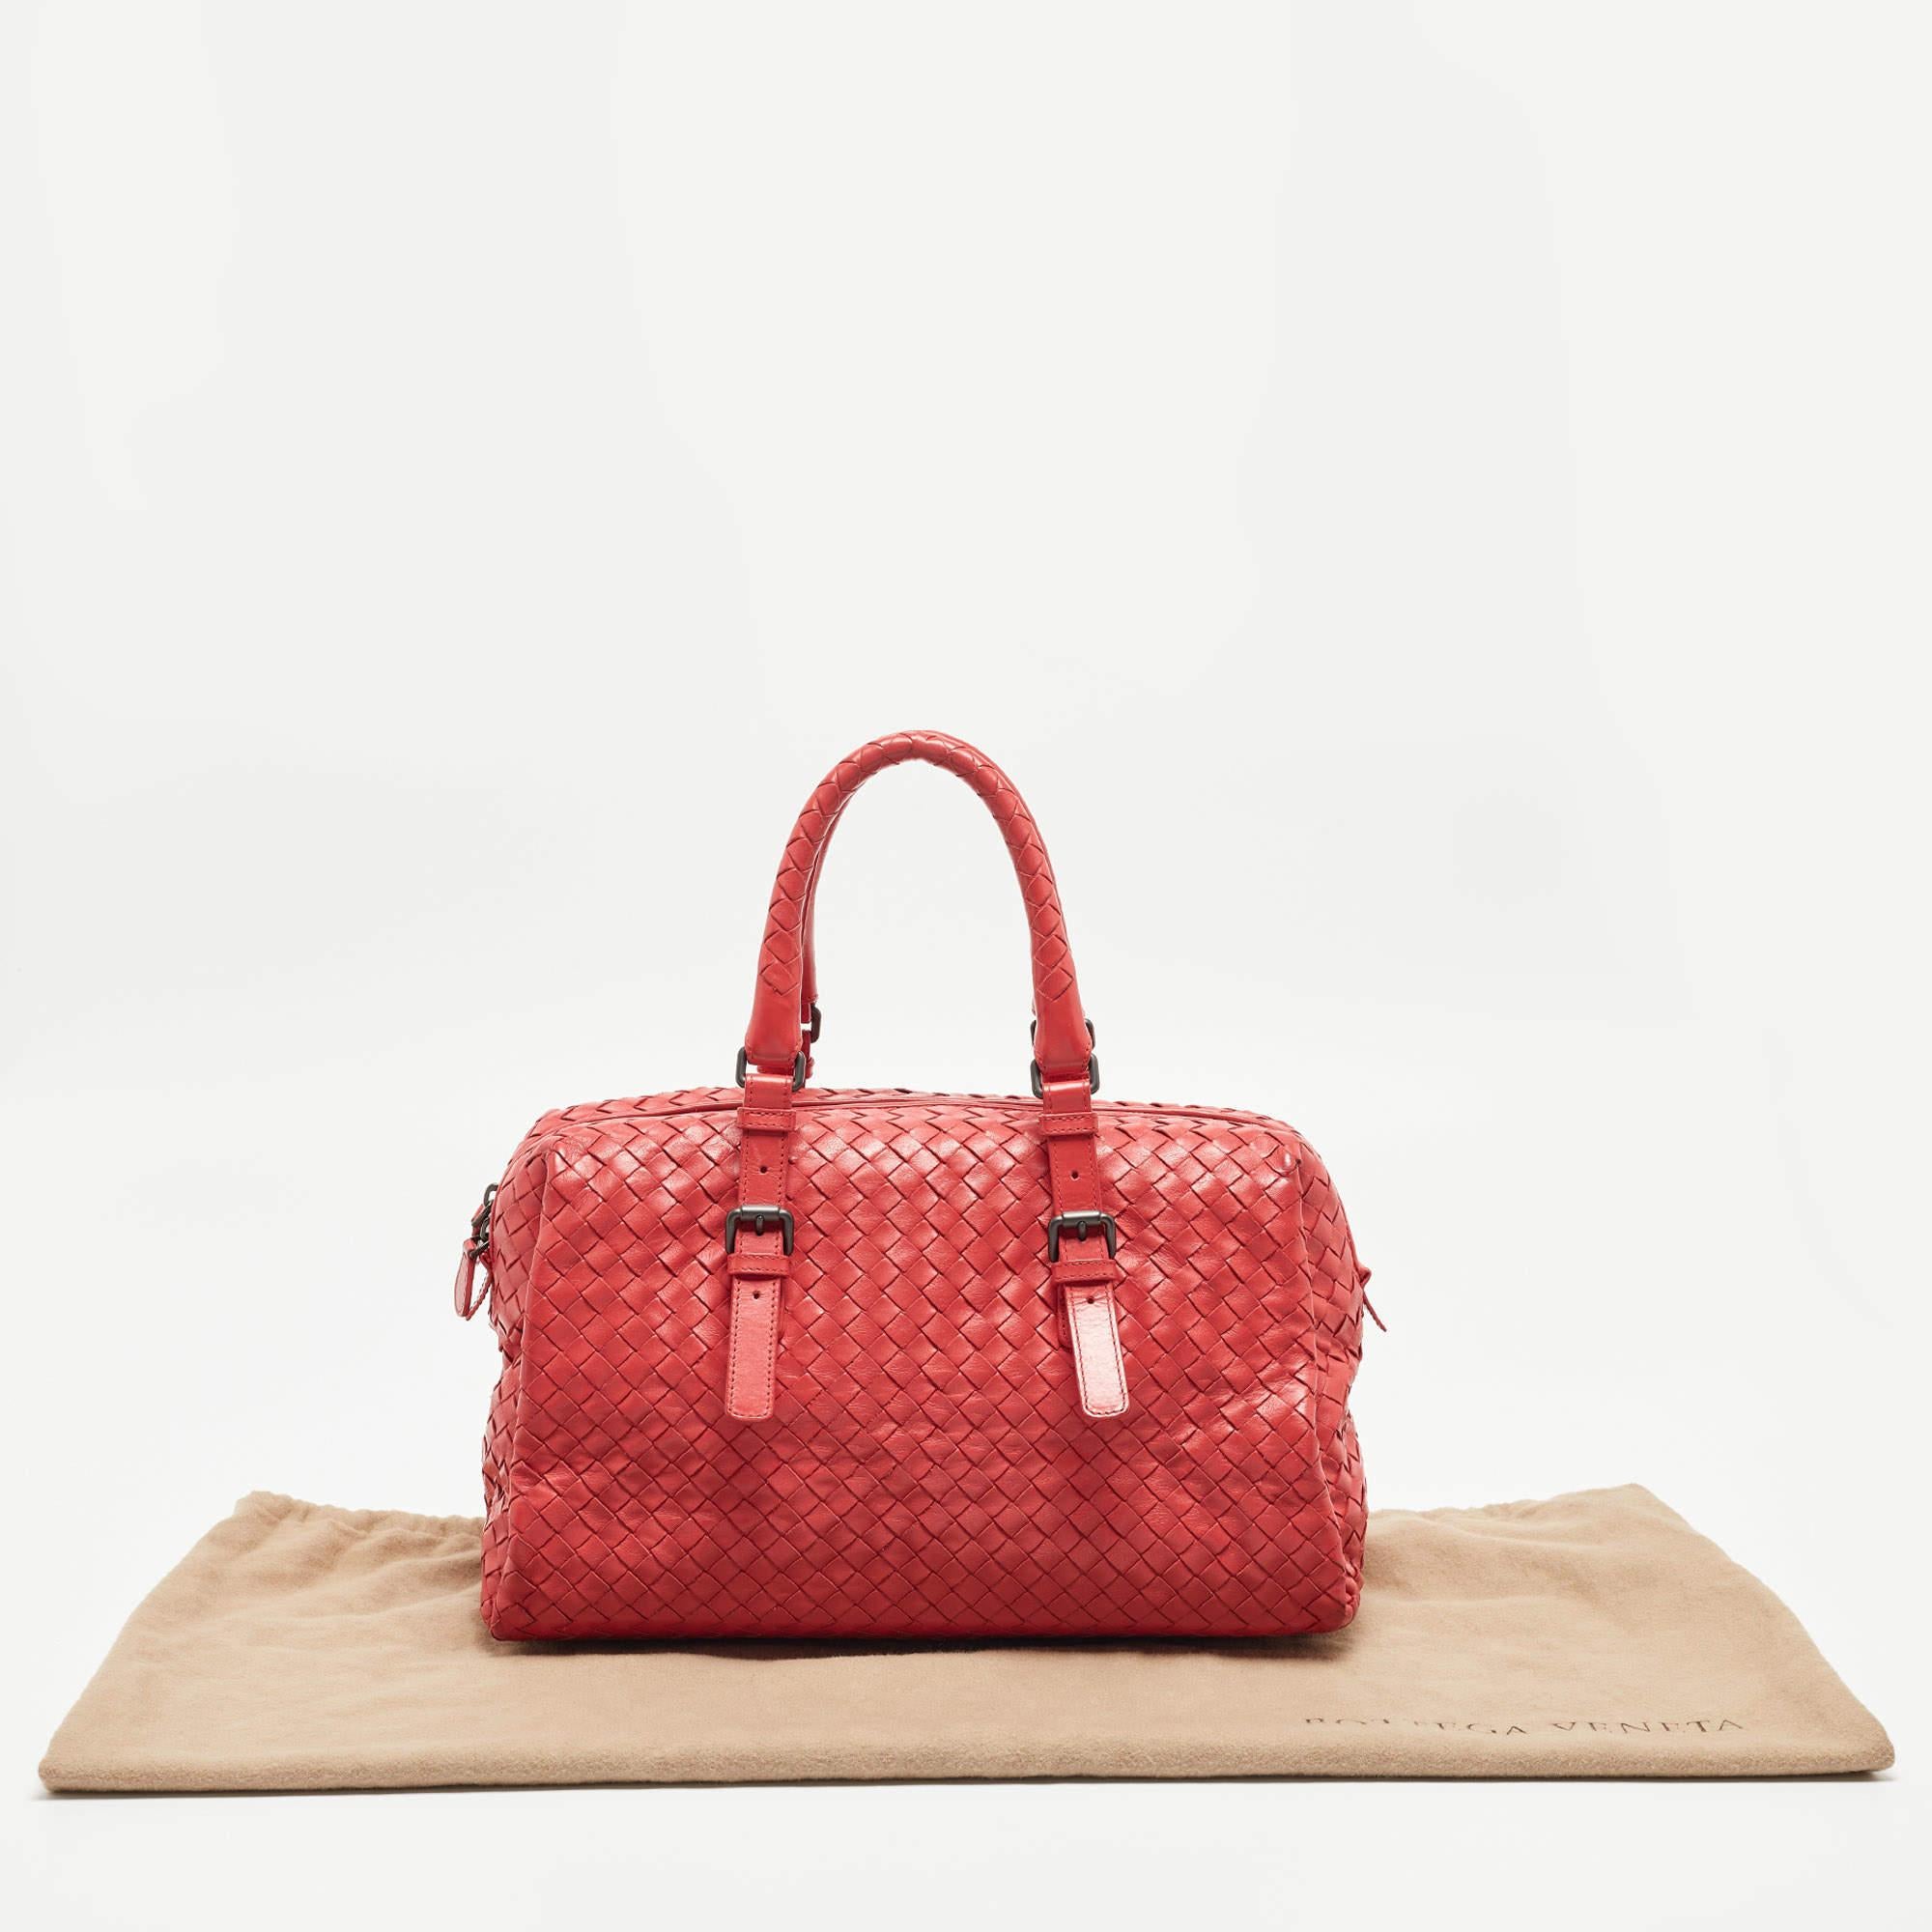 Bottega Veneta Red Intrecciato Leather New Boston Bag For Sale 8